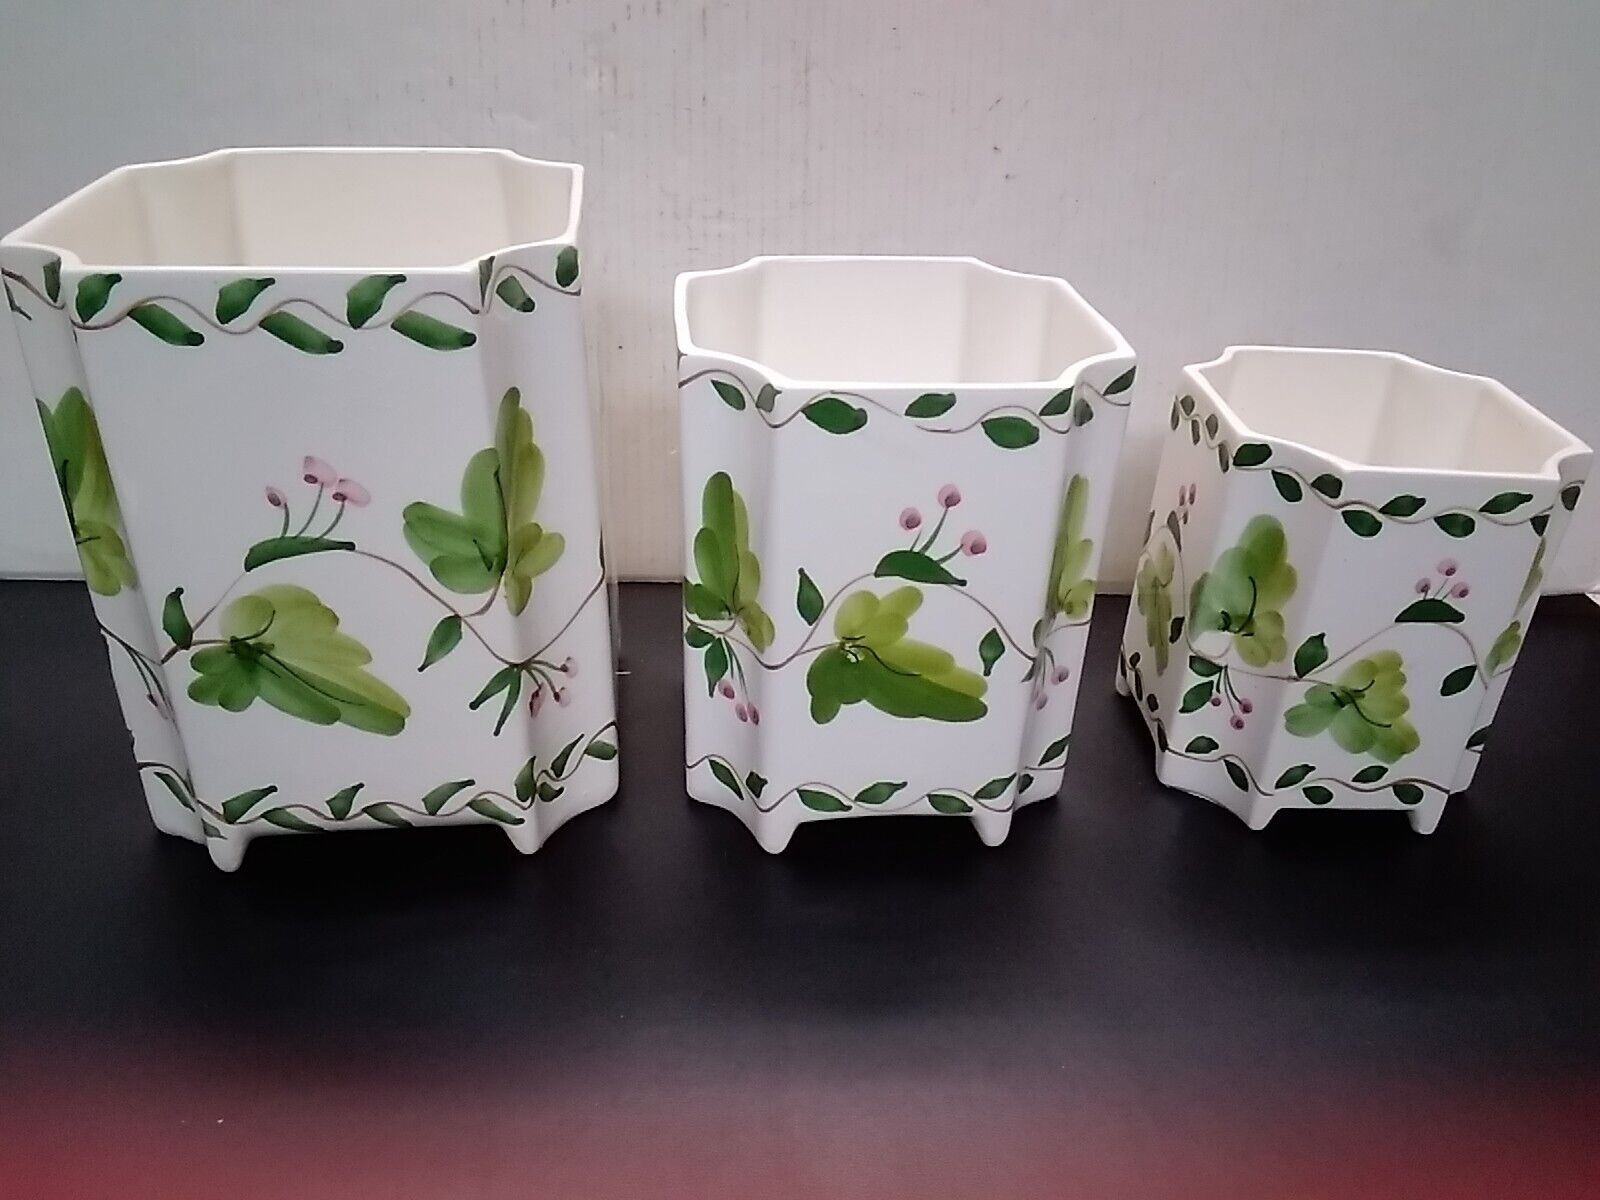 Vintage Portugal Ceramic Hand-painted Ivy Planters 3 Grad Sizes # 736-737-738